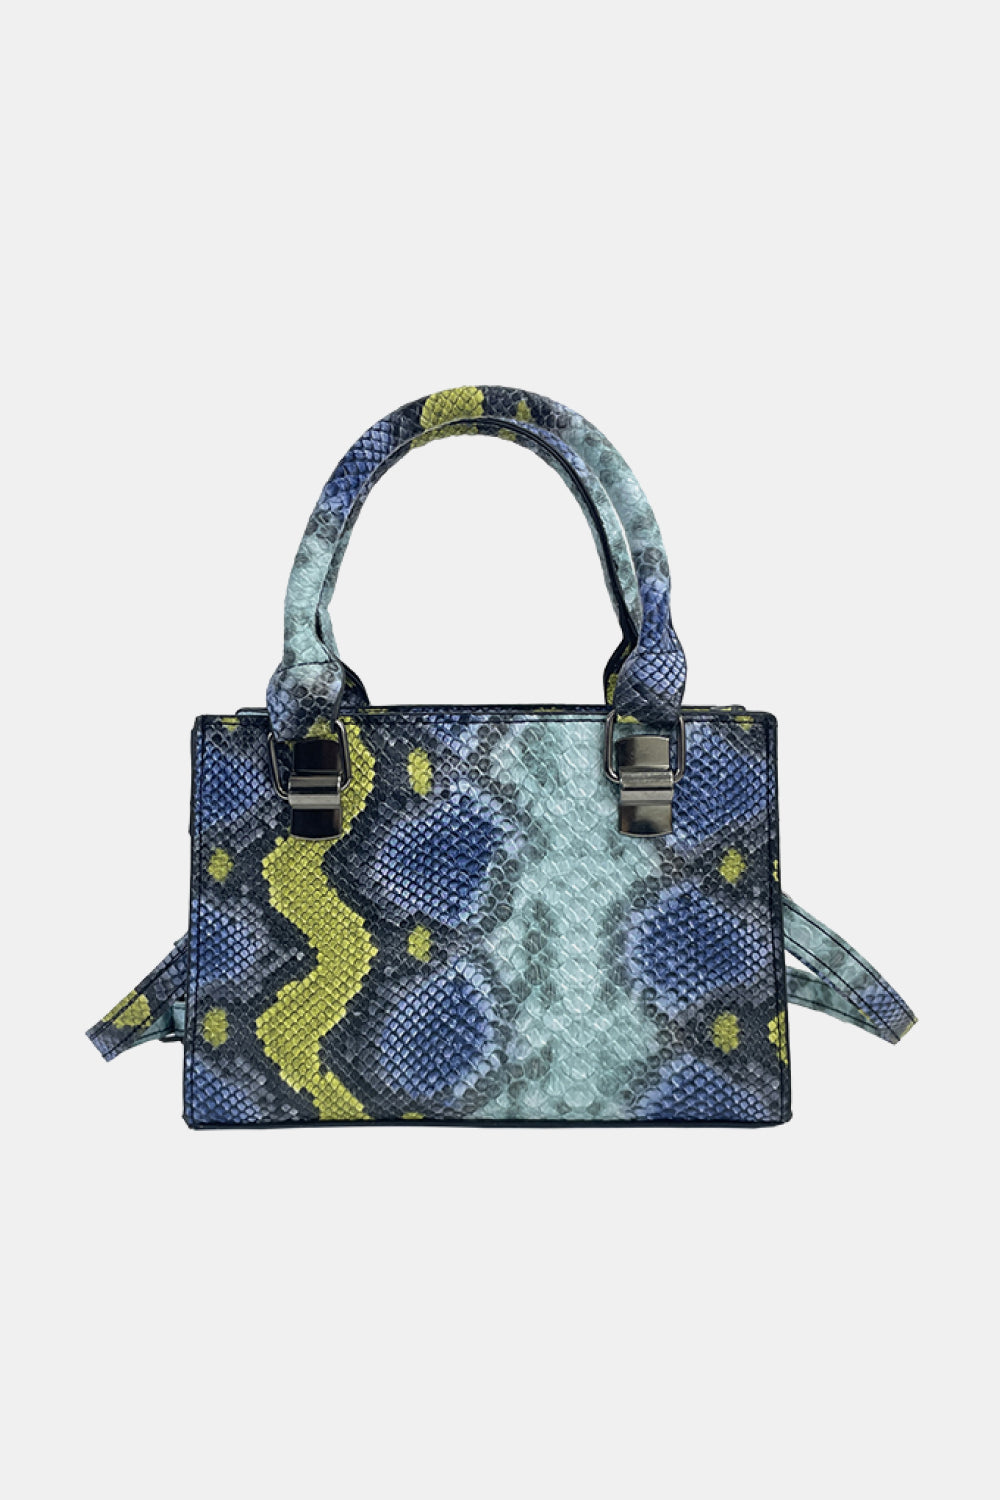 Snakeskin Print PU Leather Handbag - Handbag - FITGGINS